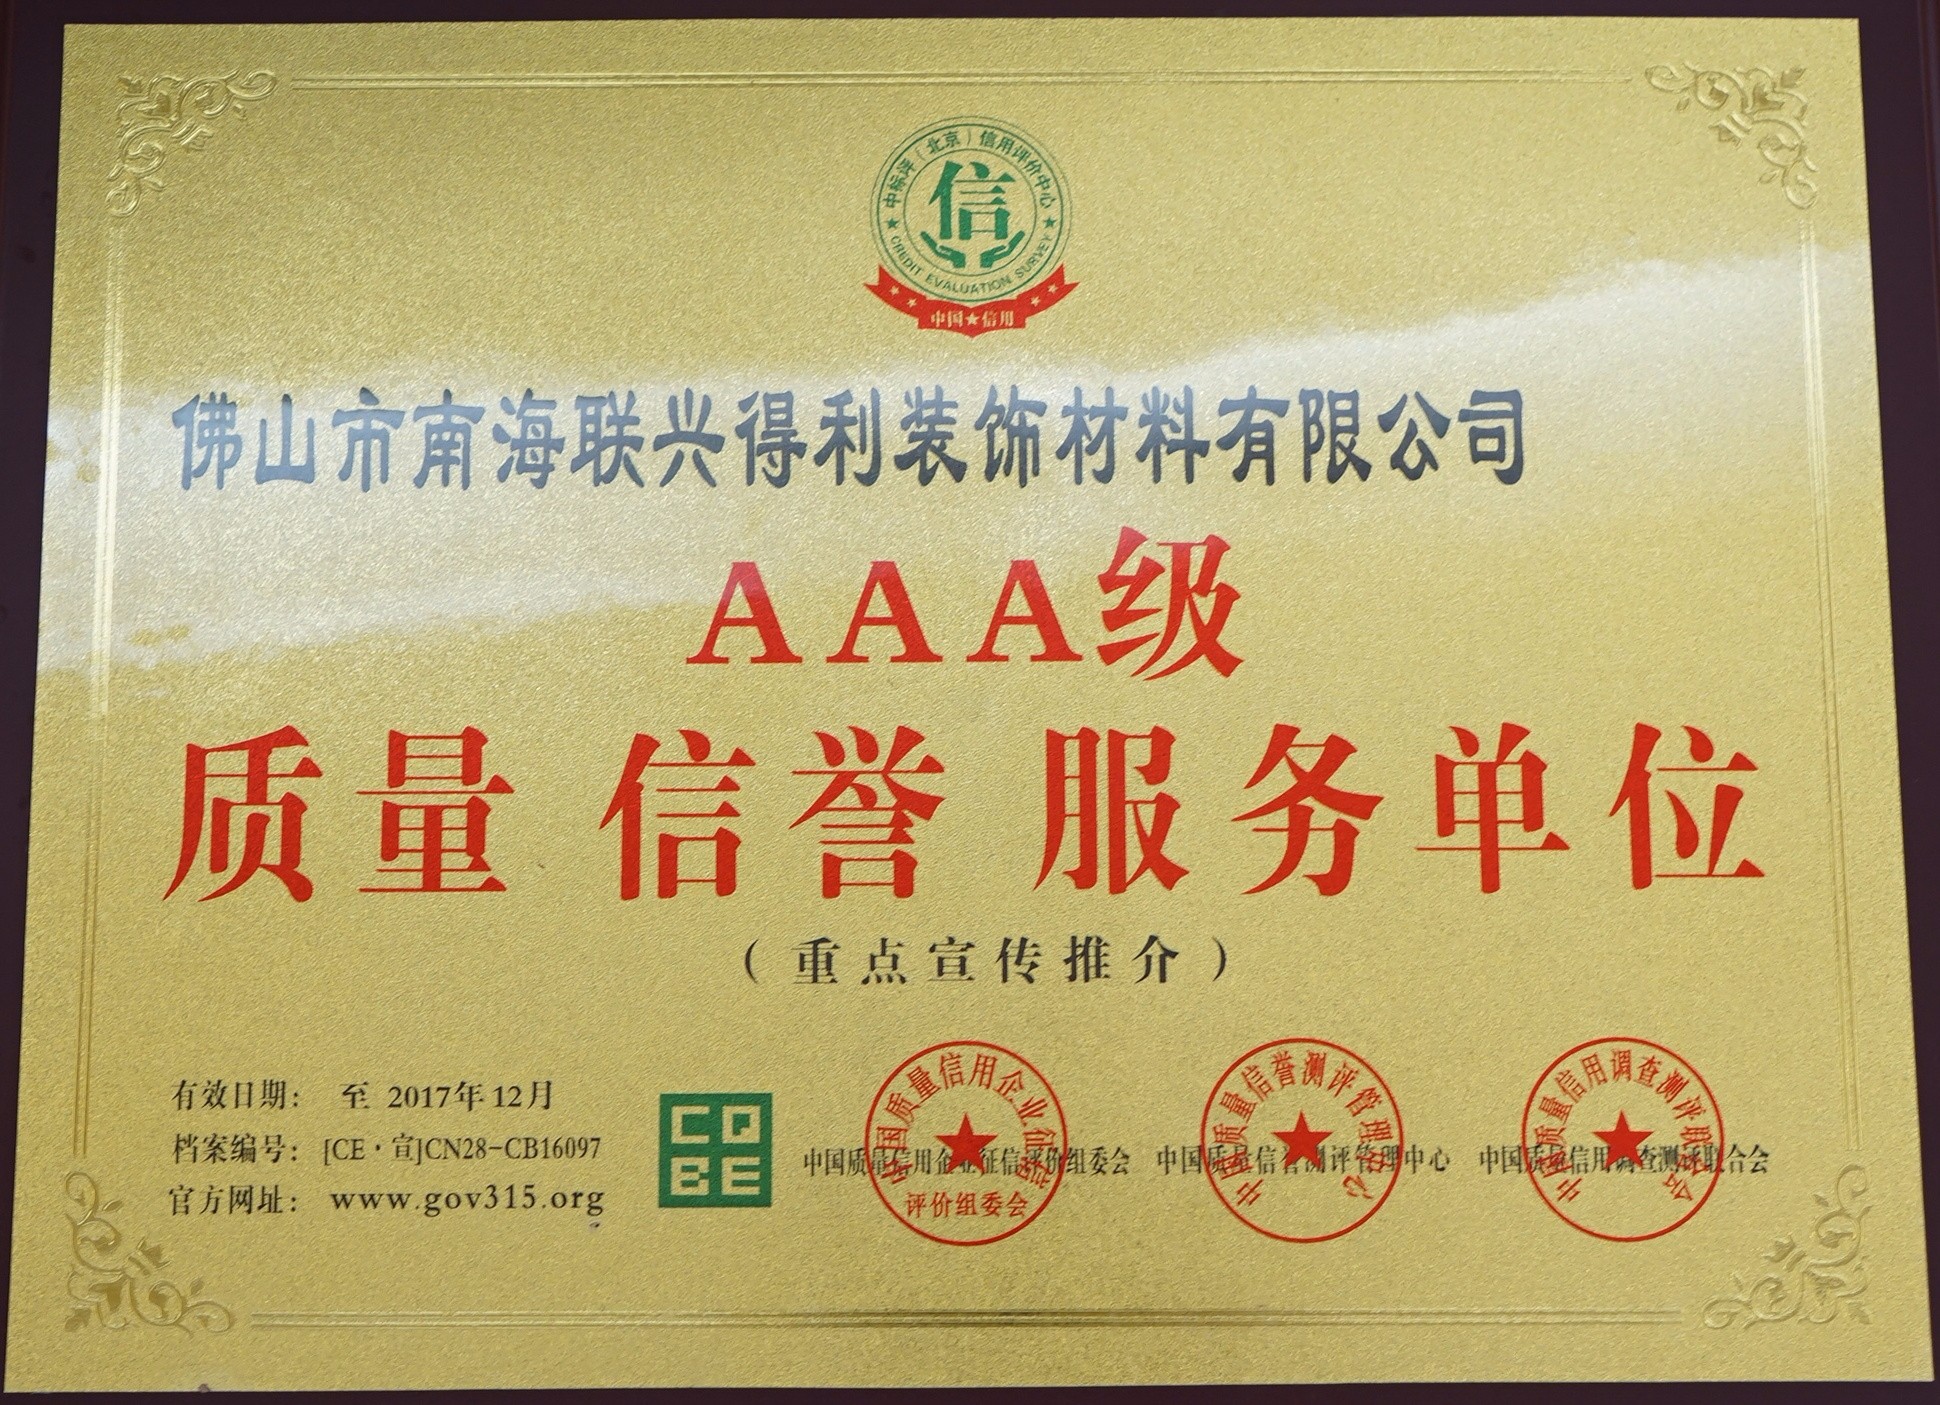 AAA Quality Level Company